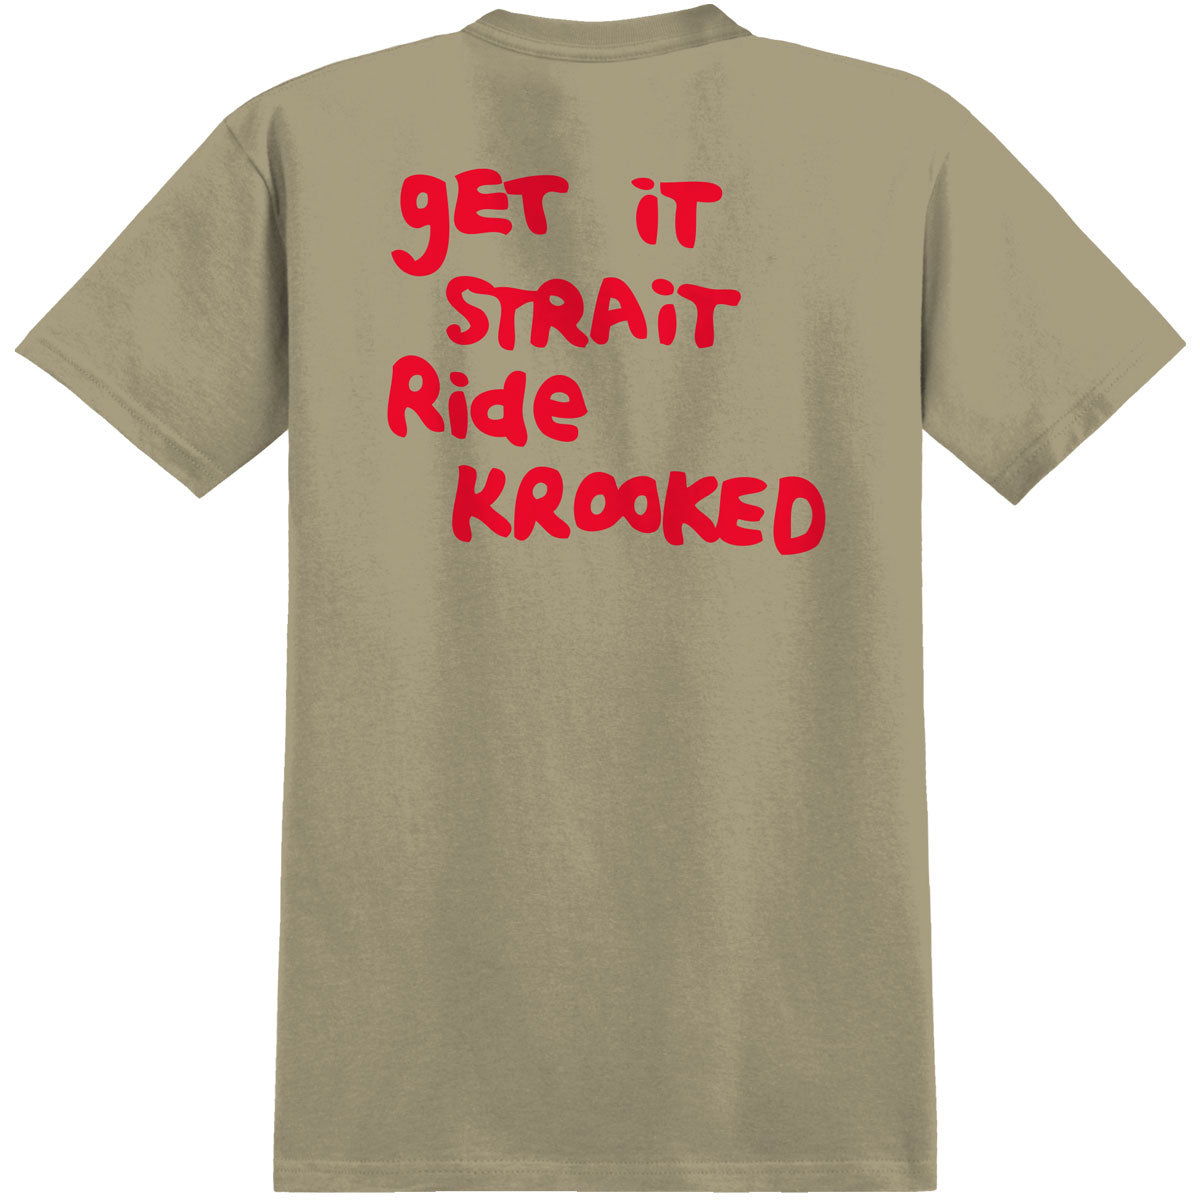 Krooked Strait Eyes T-Shirt - Sand/Red image 2